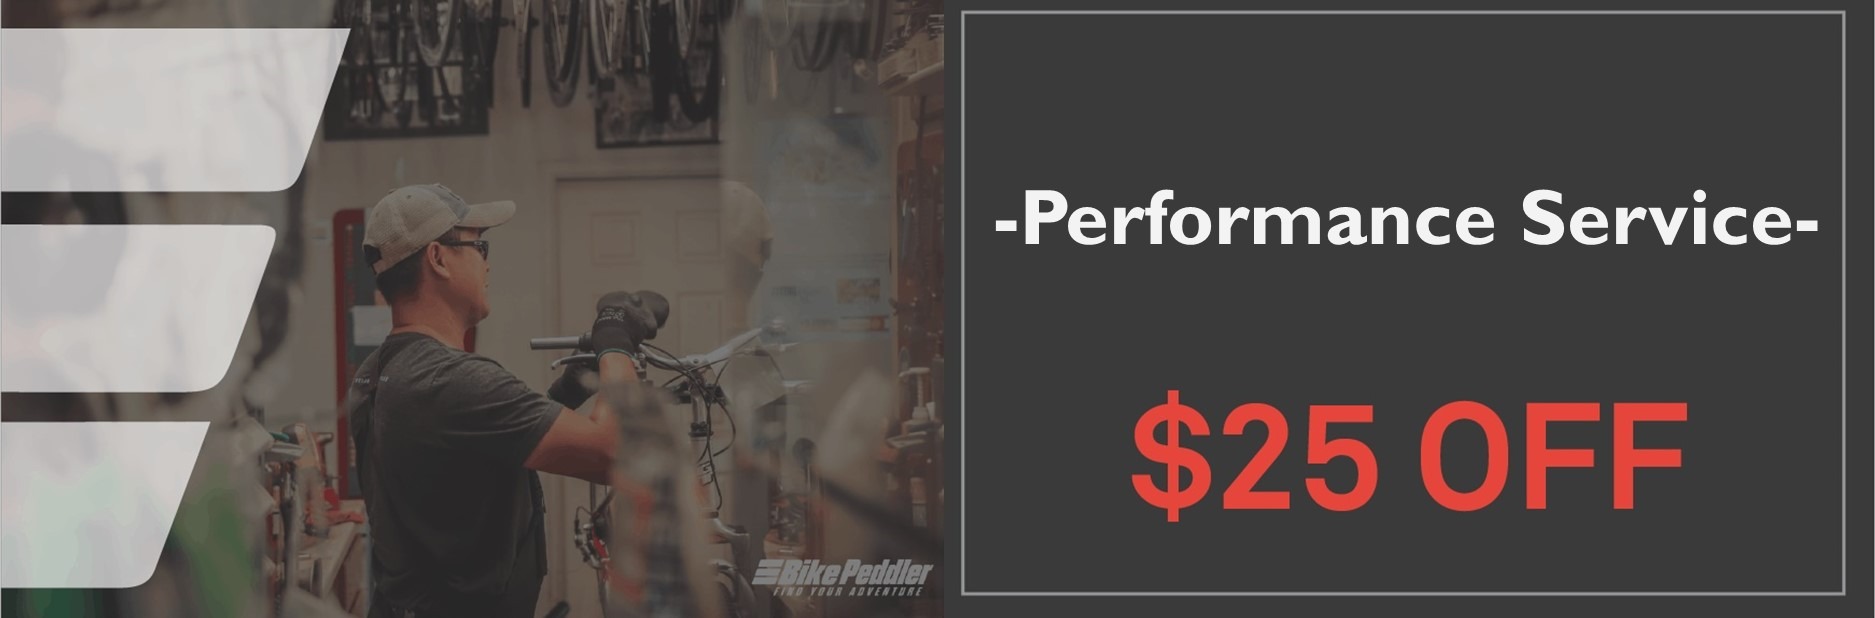 Performance Service | $25 OFF